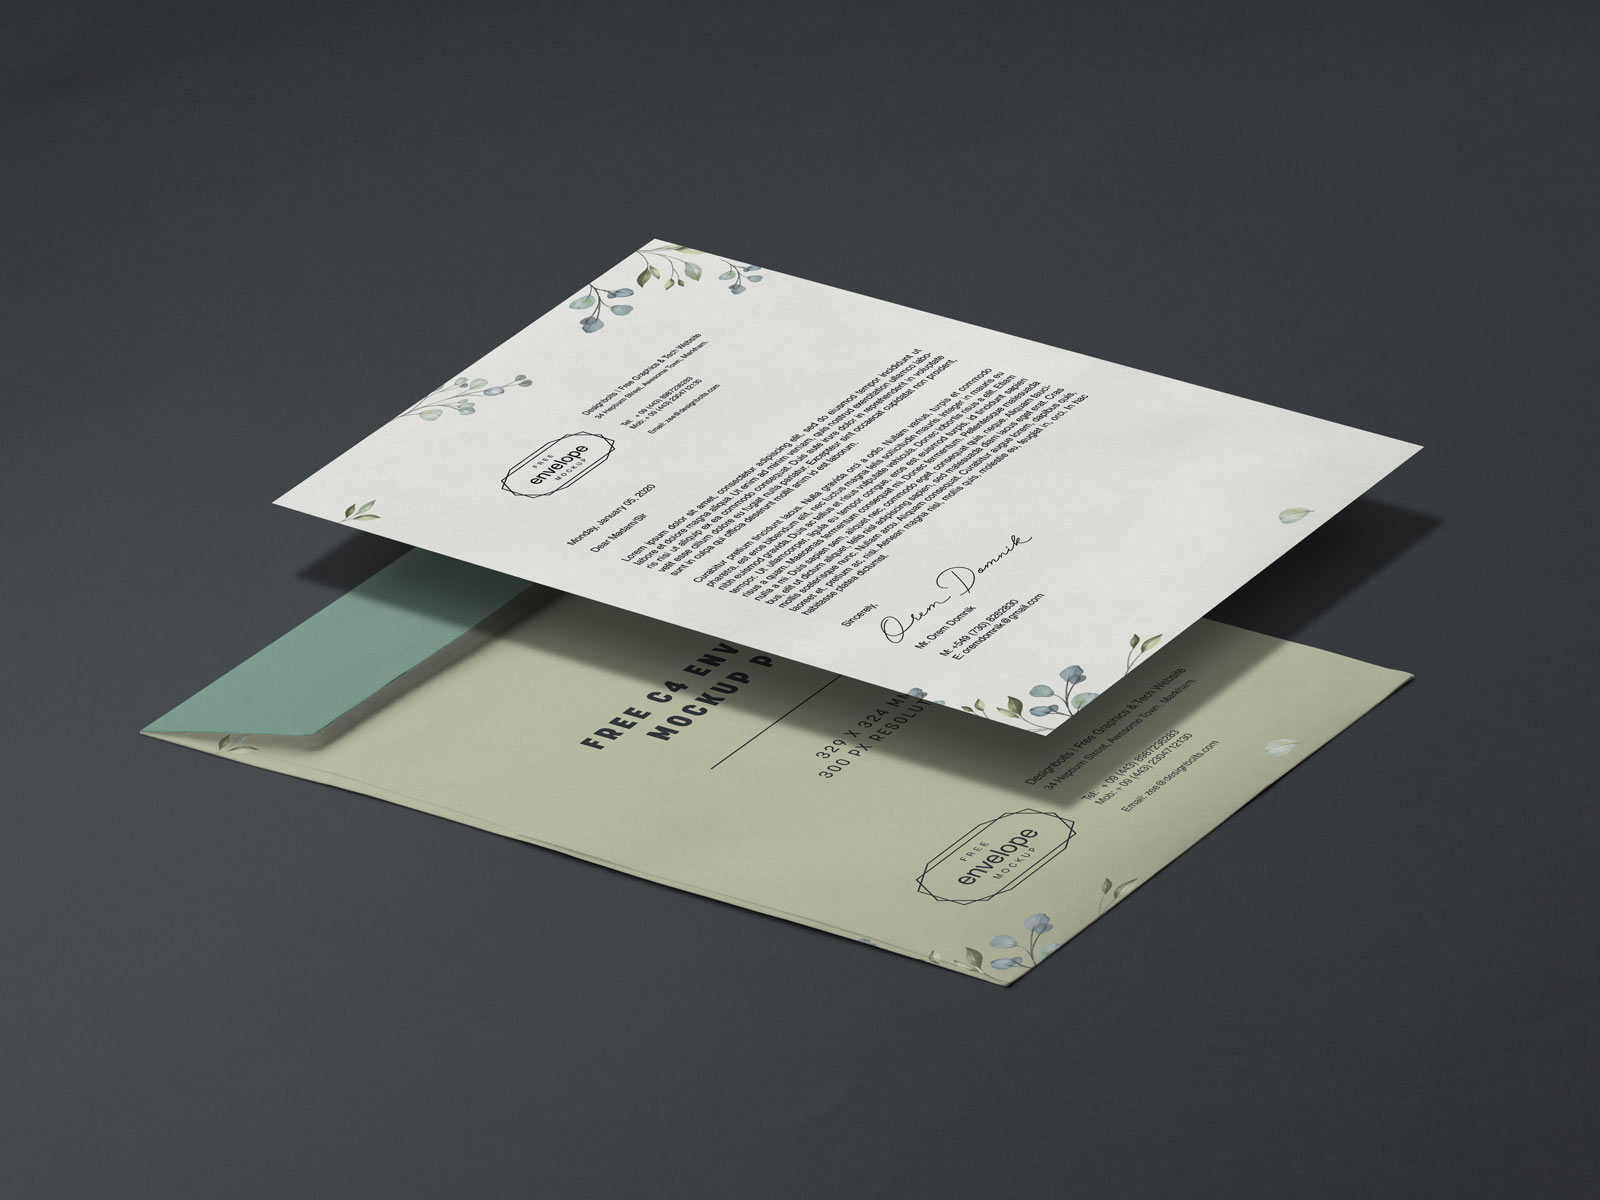 Download Free A4 Letterhead & C4 Envelope Mockup PSD | Designbolts